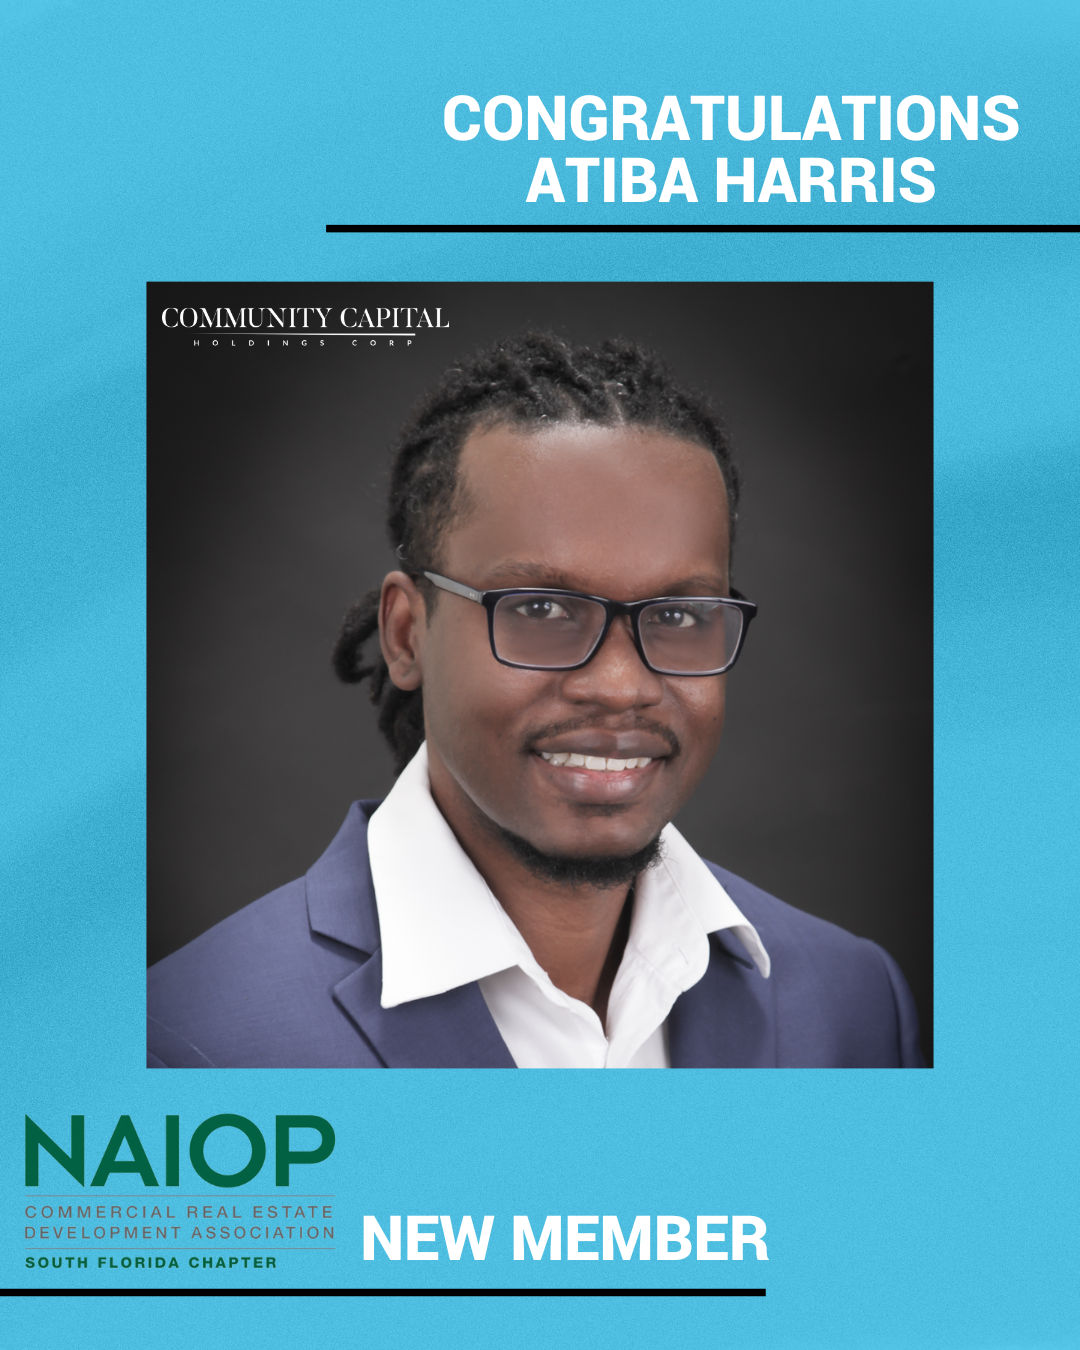 A graphic congratulations Atiba joining NAIOP. The image his headshot